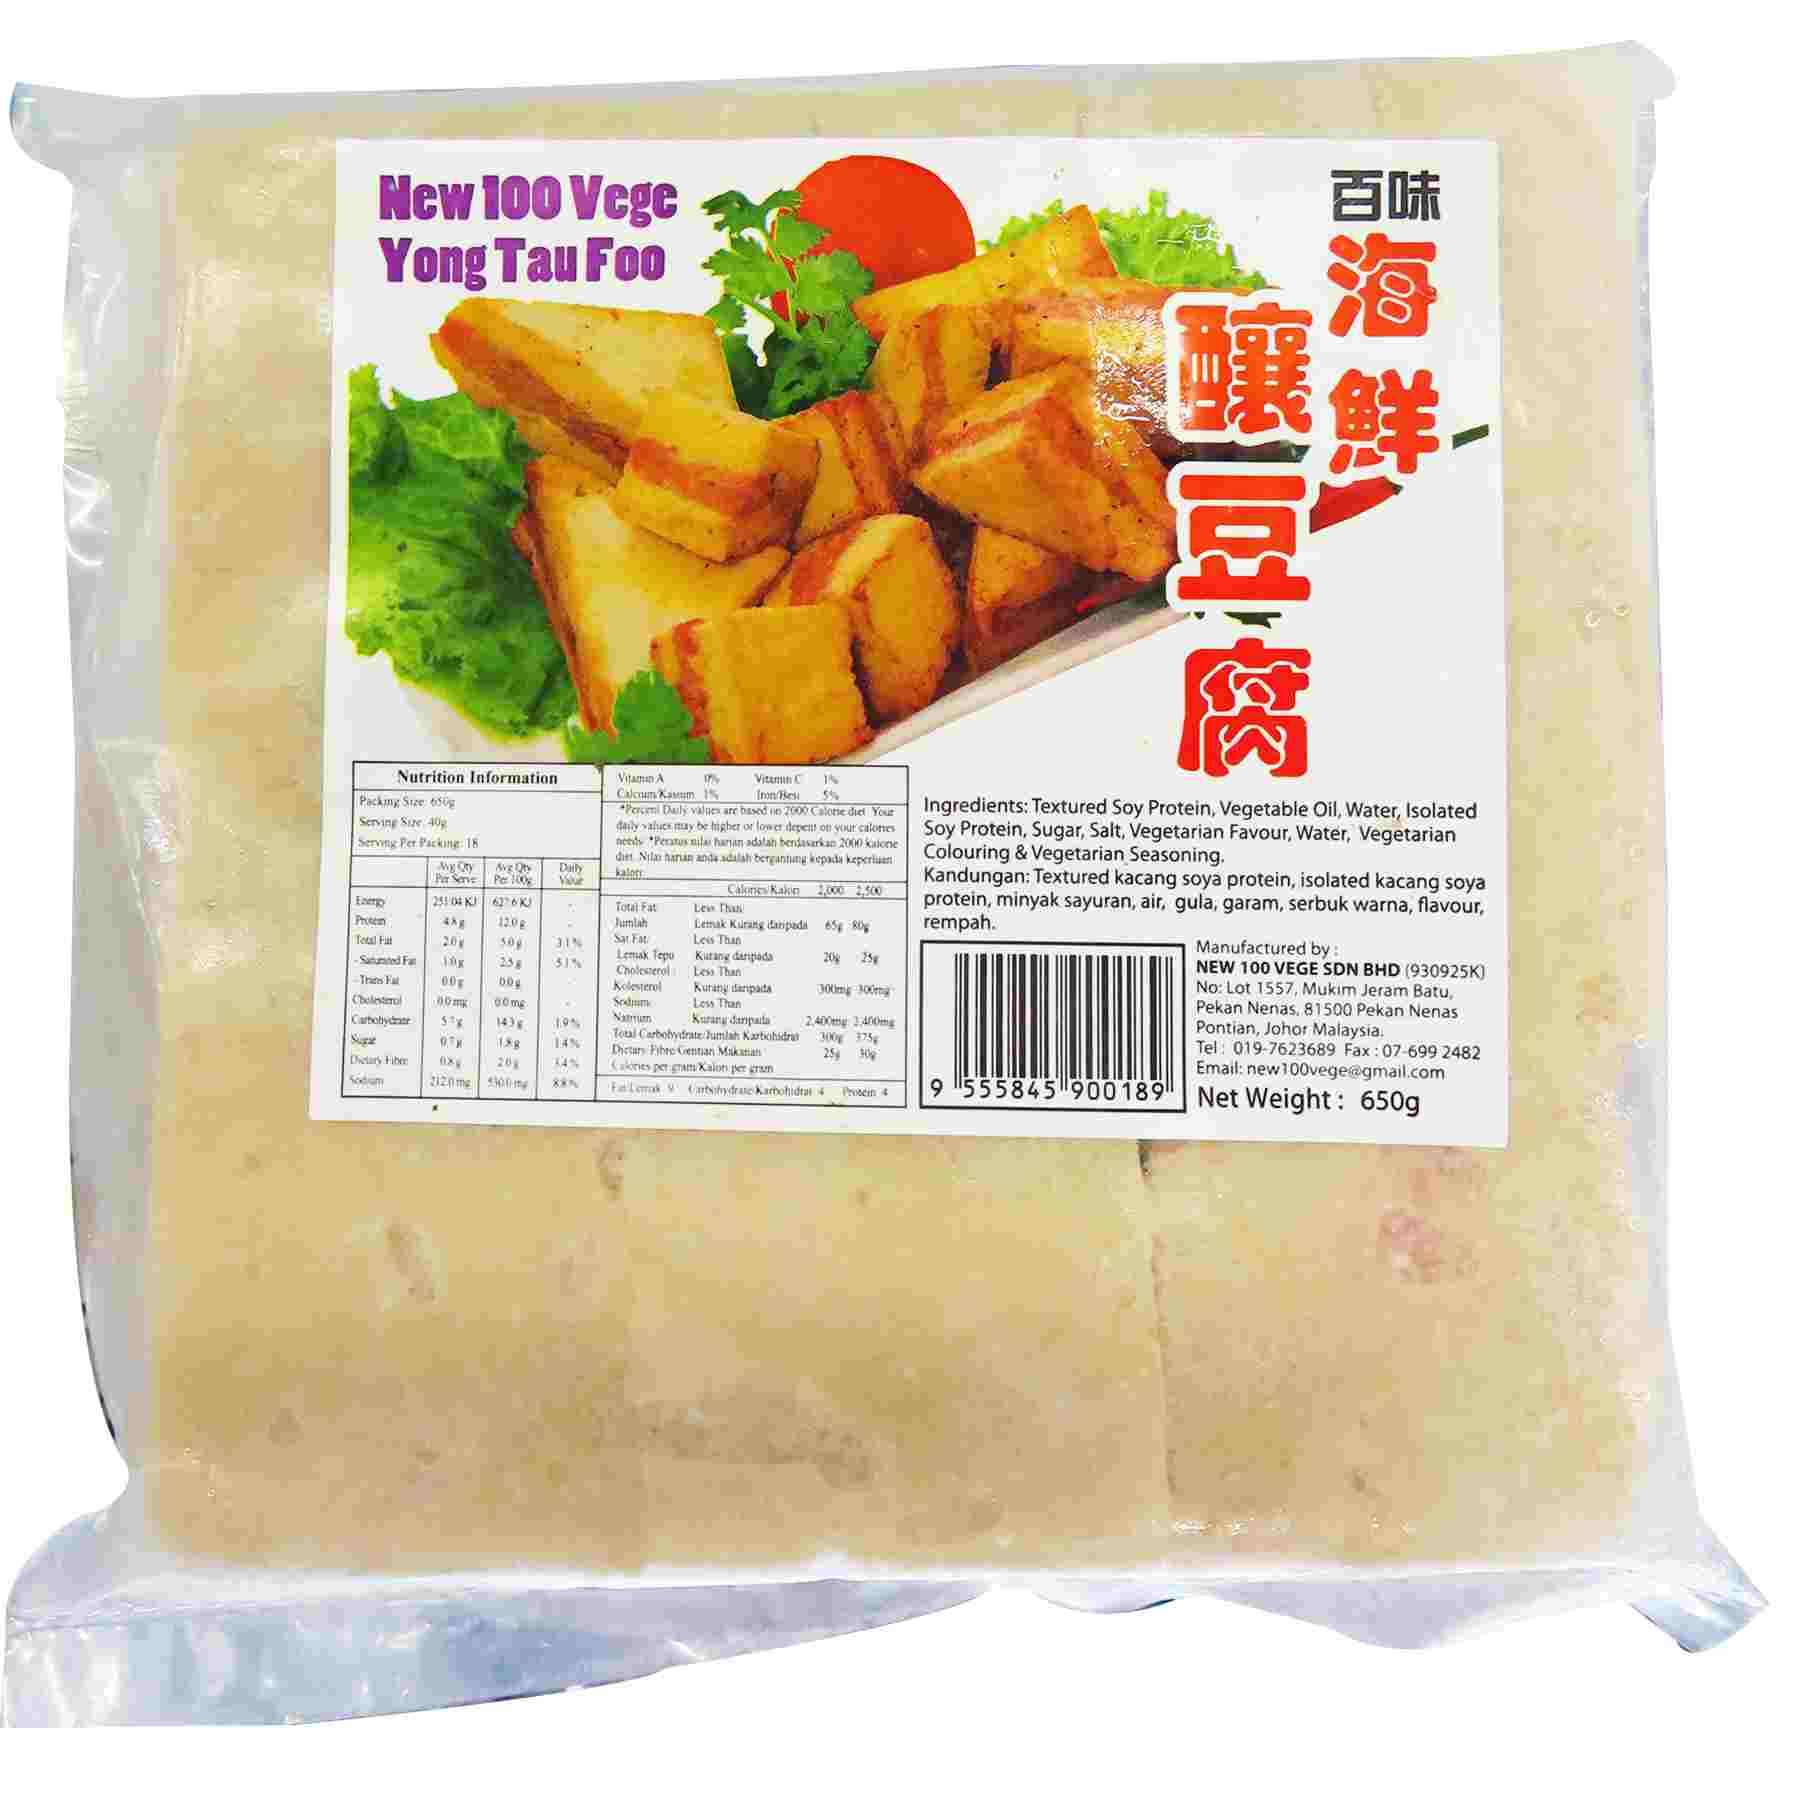 Image 100 veggie Yong Tau Foo 百味 - 海鲜酿豆腐650grams